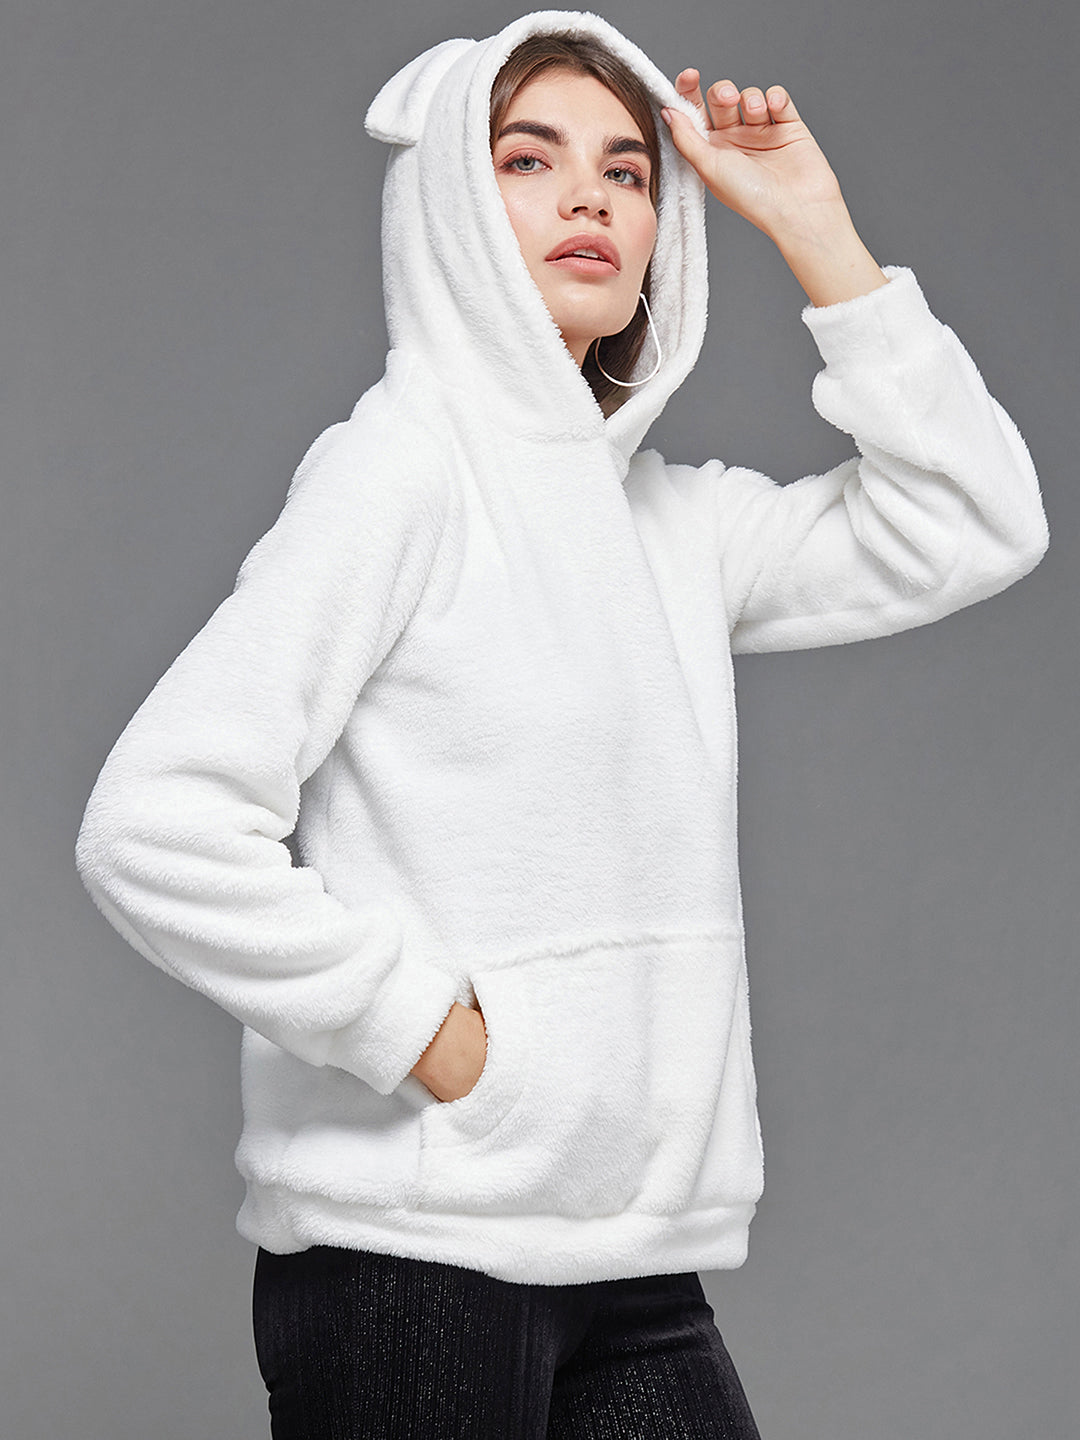 Women's White Full-Sleeve Solid-Patterned Regular-Length Pullover-Styled Polyester Hooded Sweatshirt